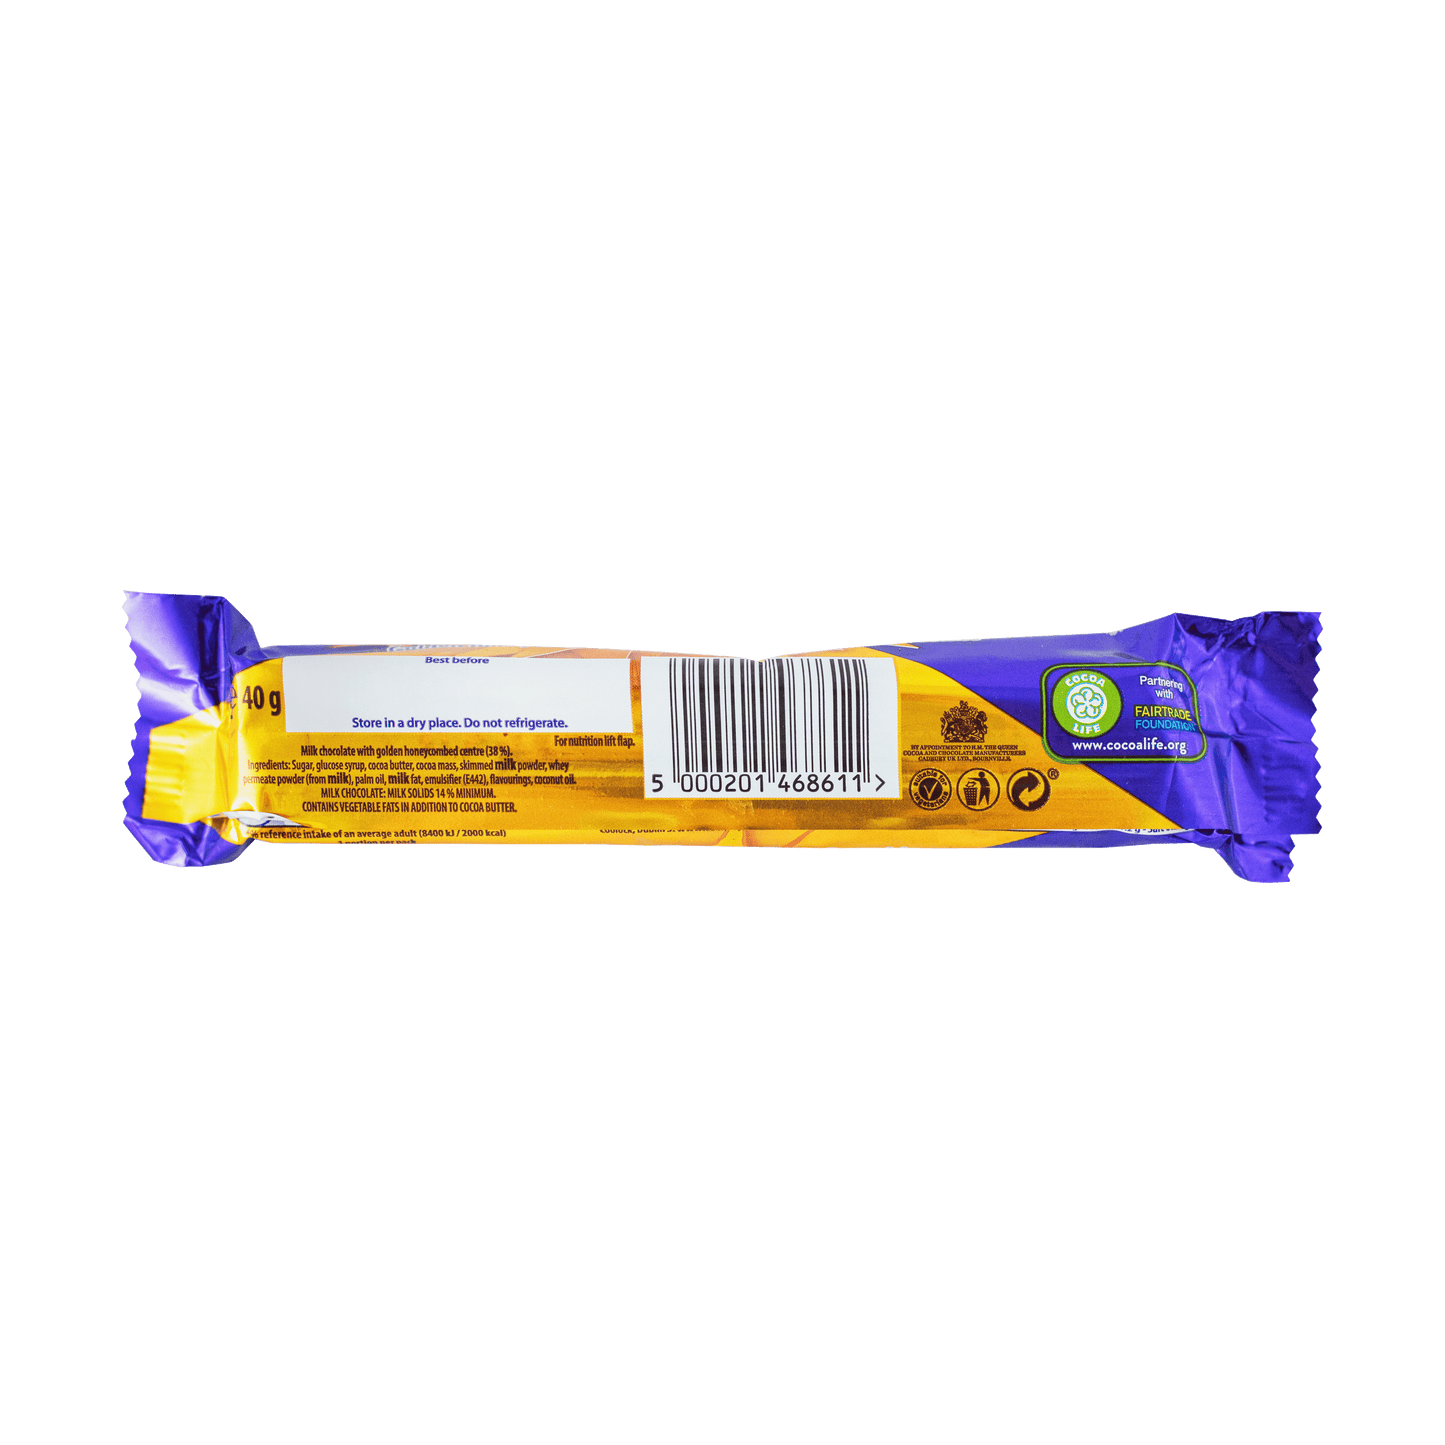 Cadbury Crunchie Single Bar 40g